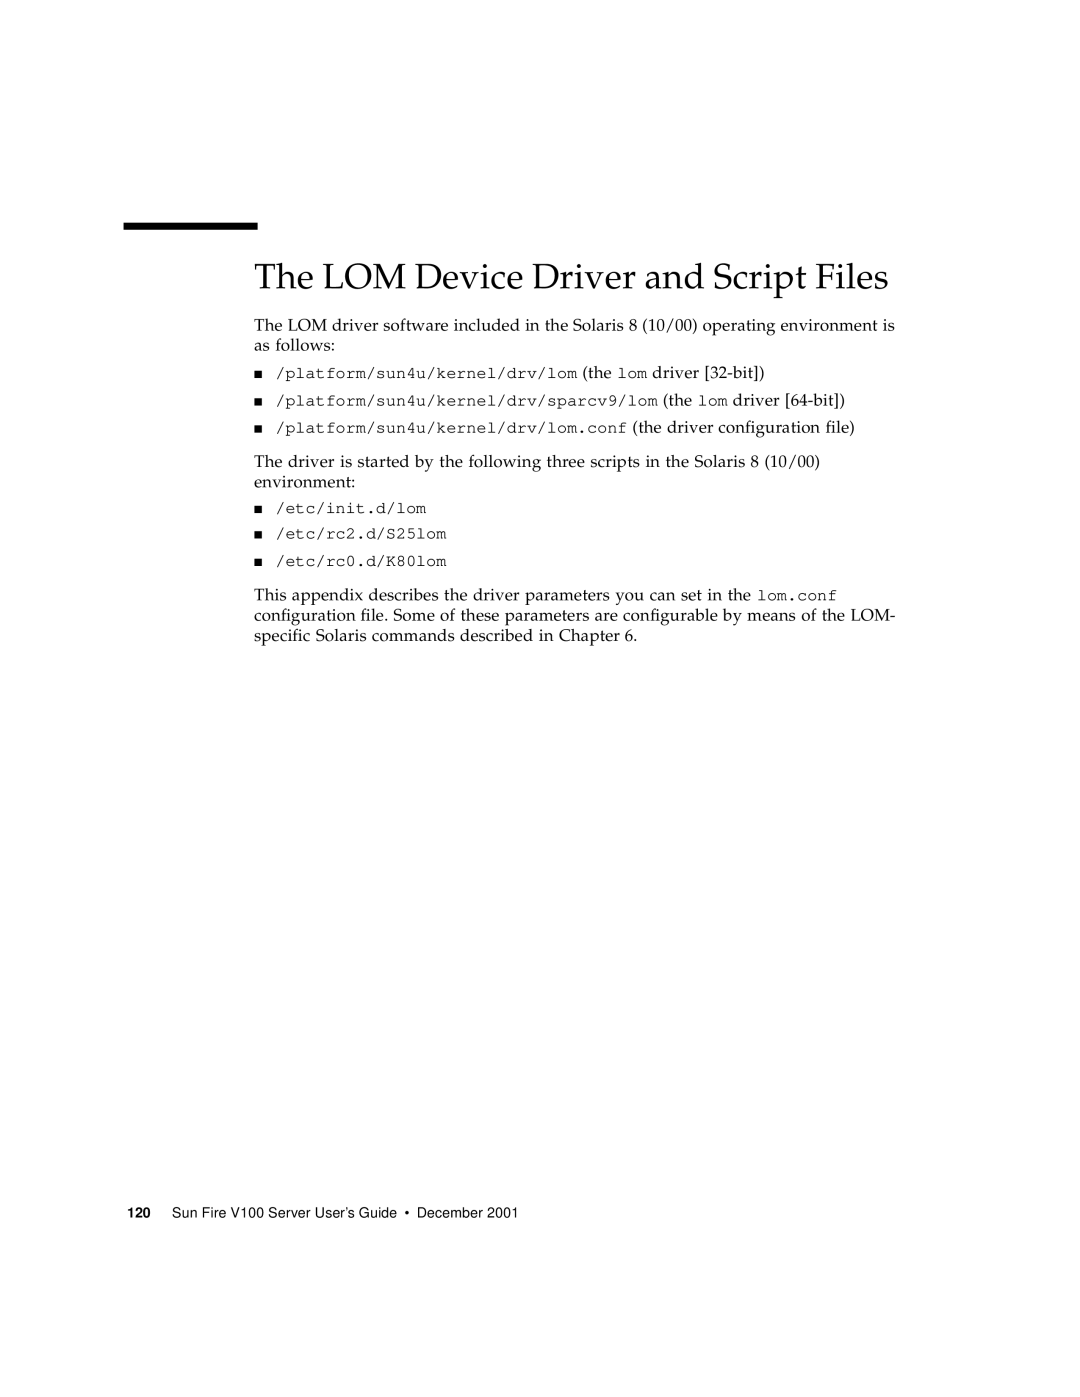 Sun Microsystems Sun Fire V100 manual The LOM Device Driver and Script Files 